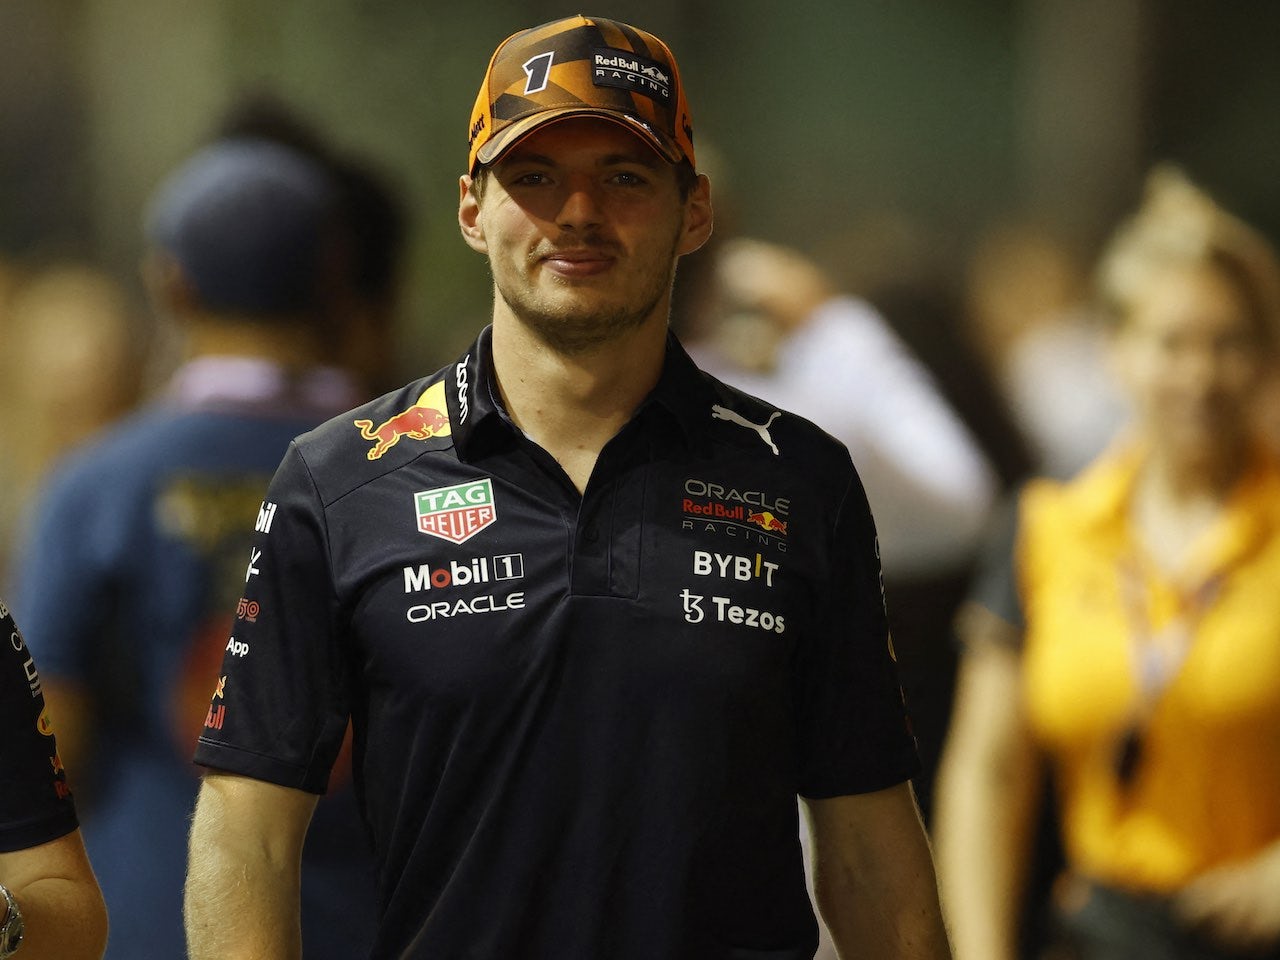 'Terrible' Singapore GP 'doesn't matter' - Verstappen